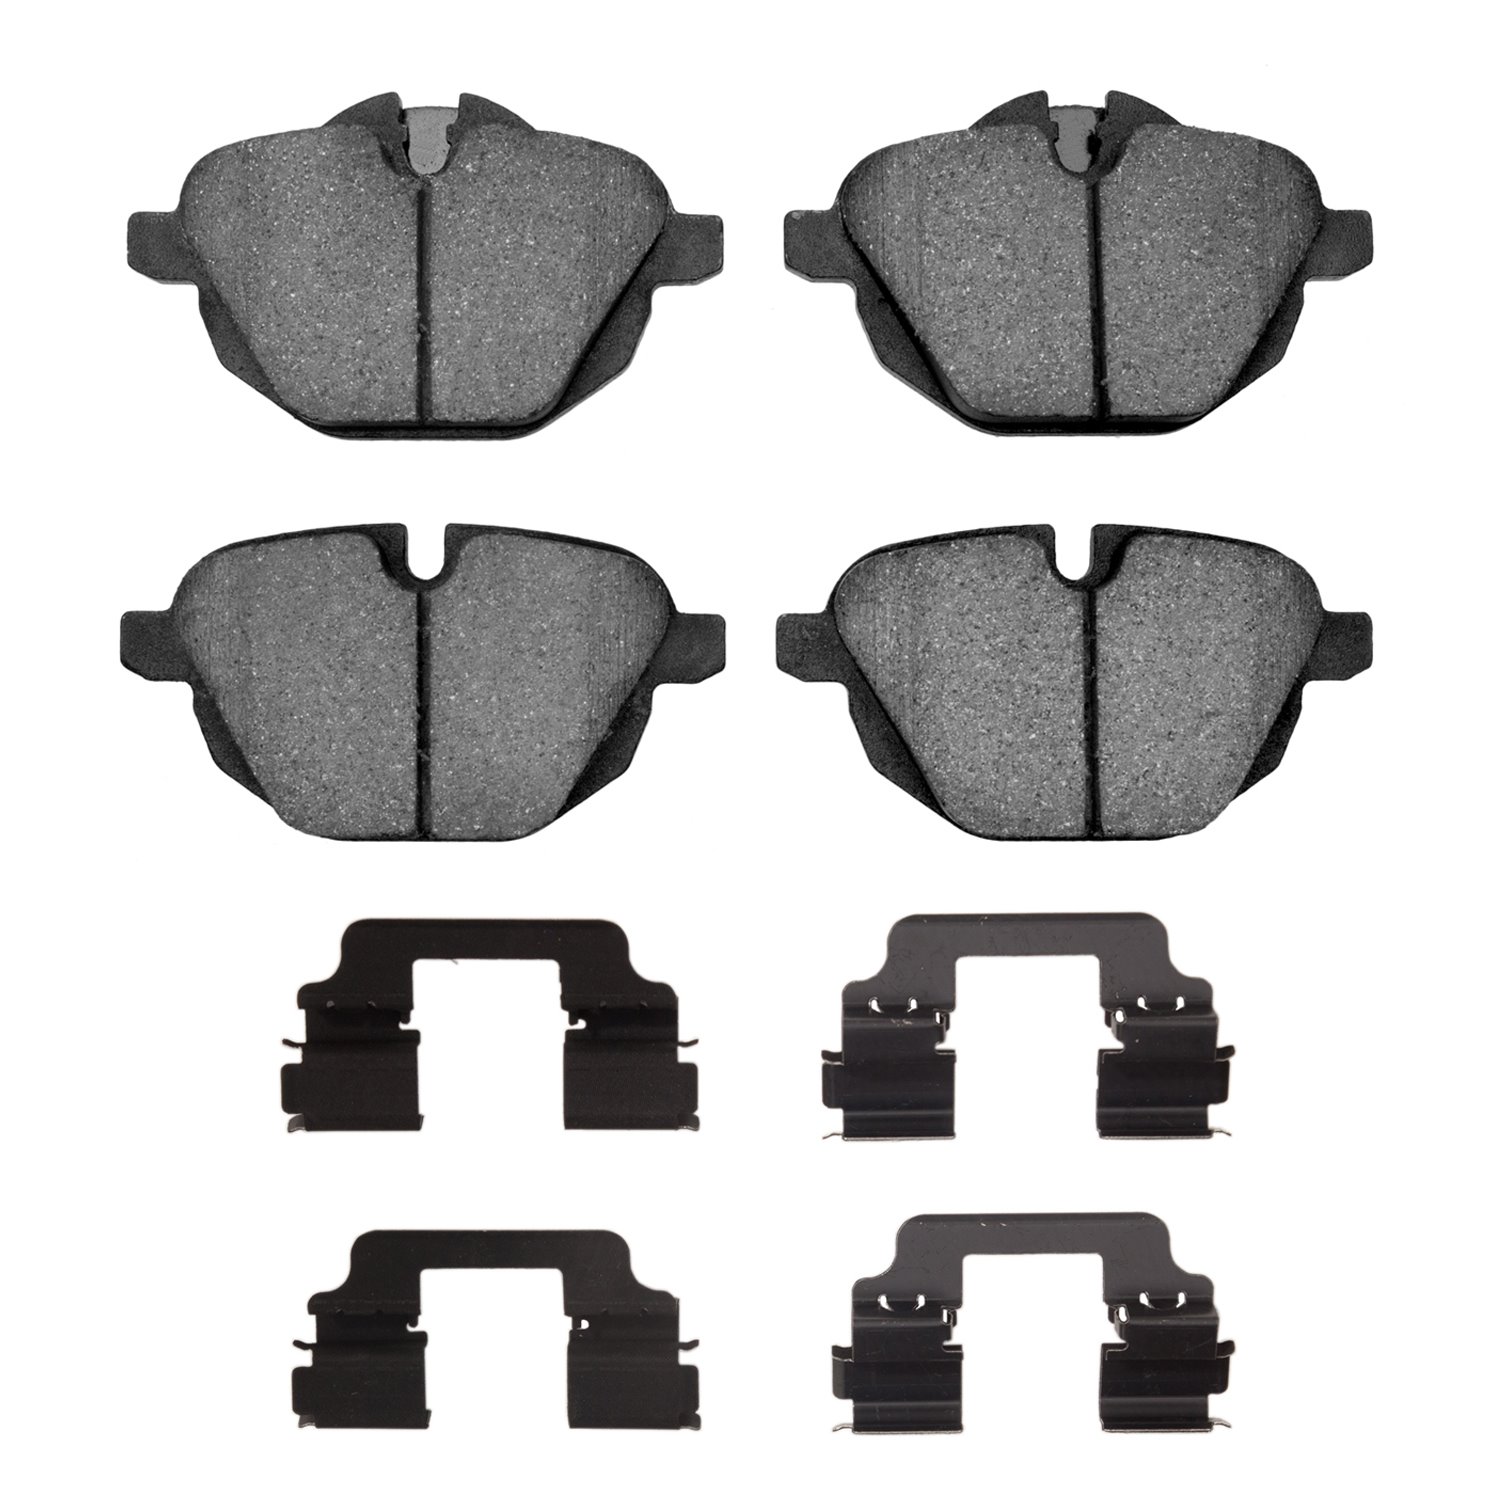 1310-1473-01 3000-Series Ceramic Brake Pads & Hardware Kit, Fits Select BMW, Position: Rear